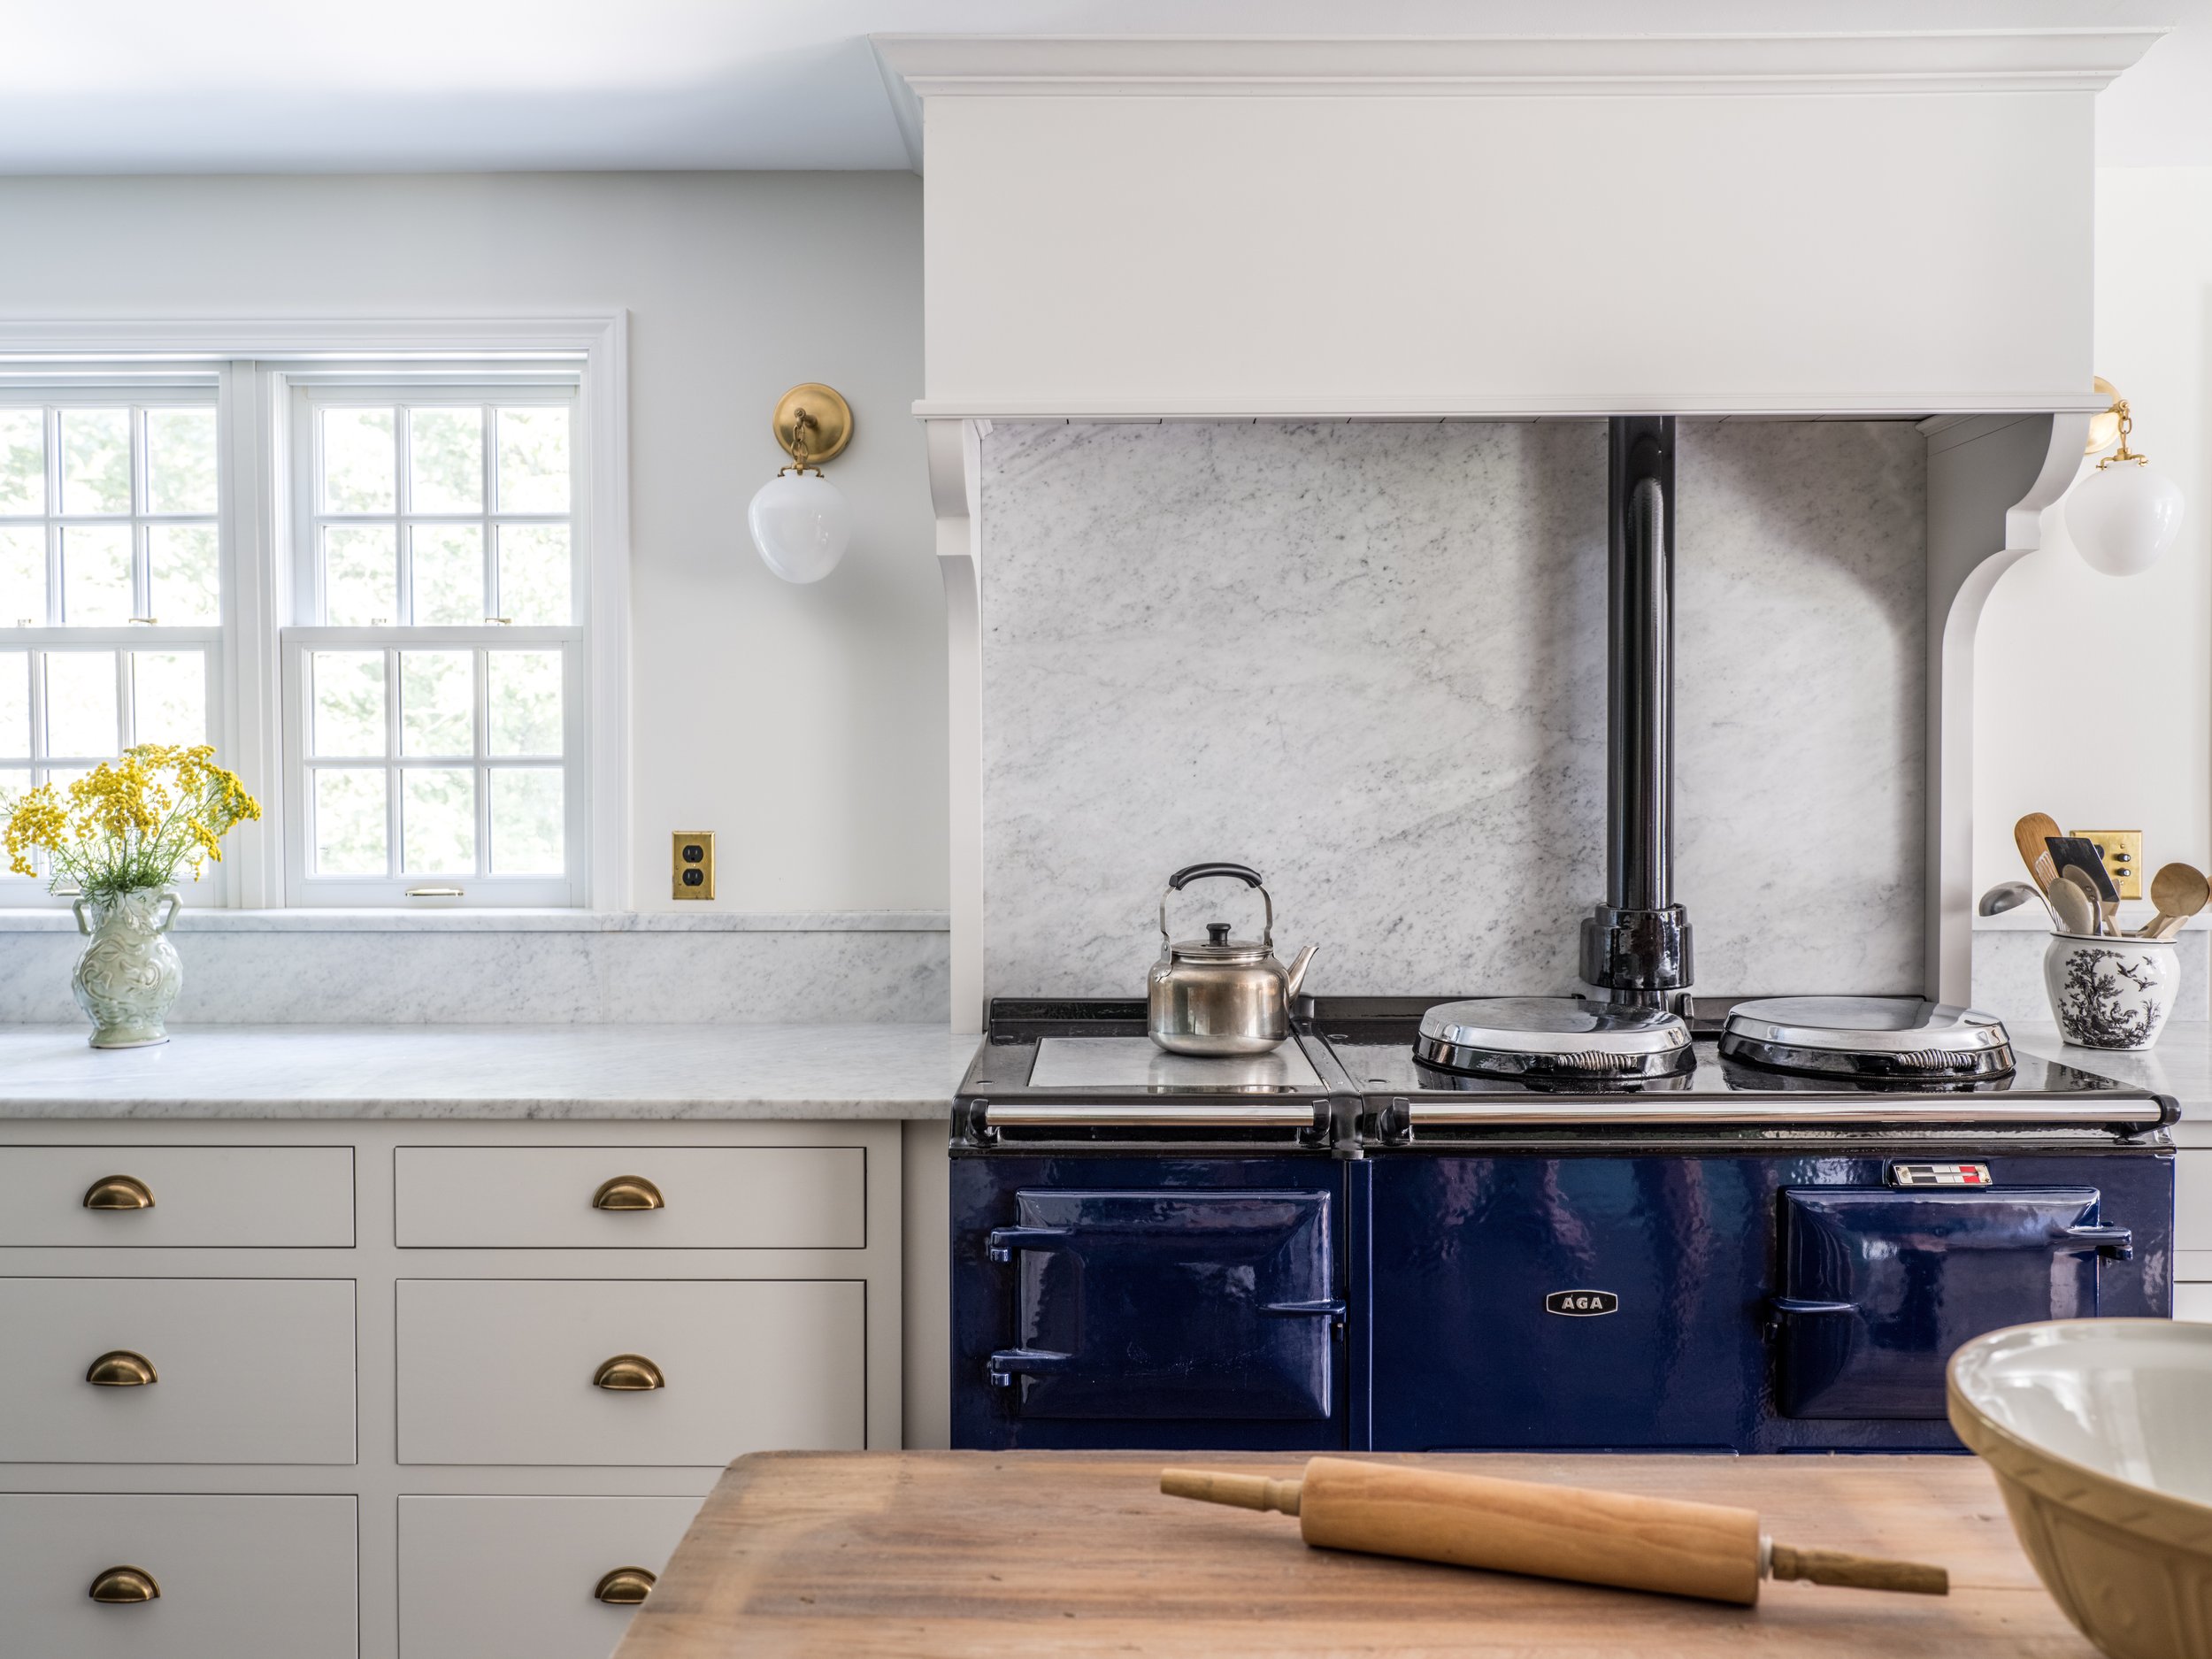 18 Kitchen Range Hood Ideas For Your Next Renovation